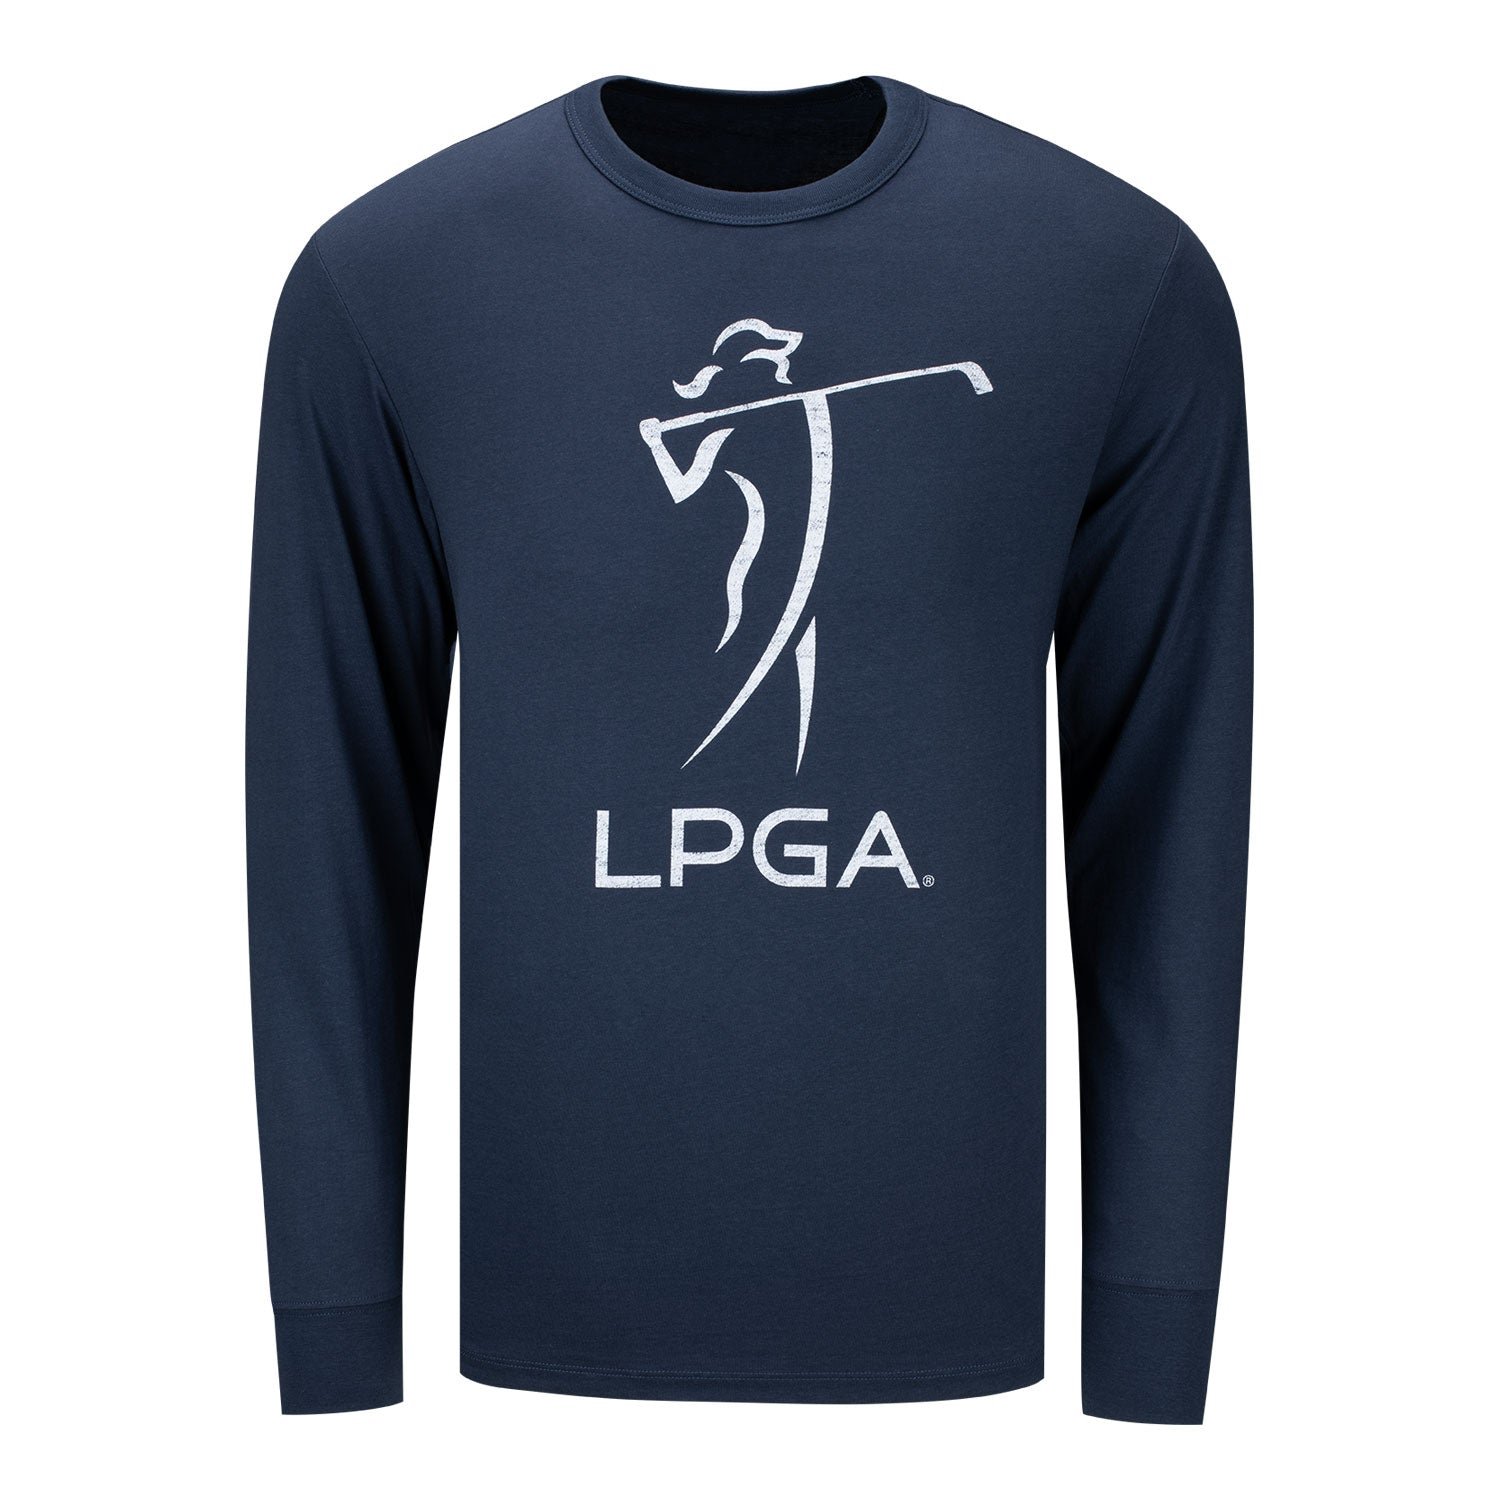 47 Brand LPGA Men's Premier Franklin Long Sleeve Tee in Atlas Blue - Front View